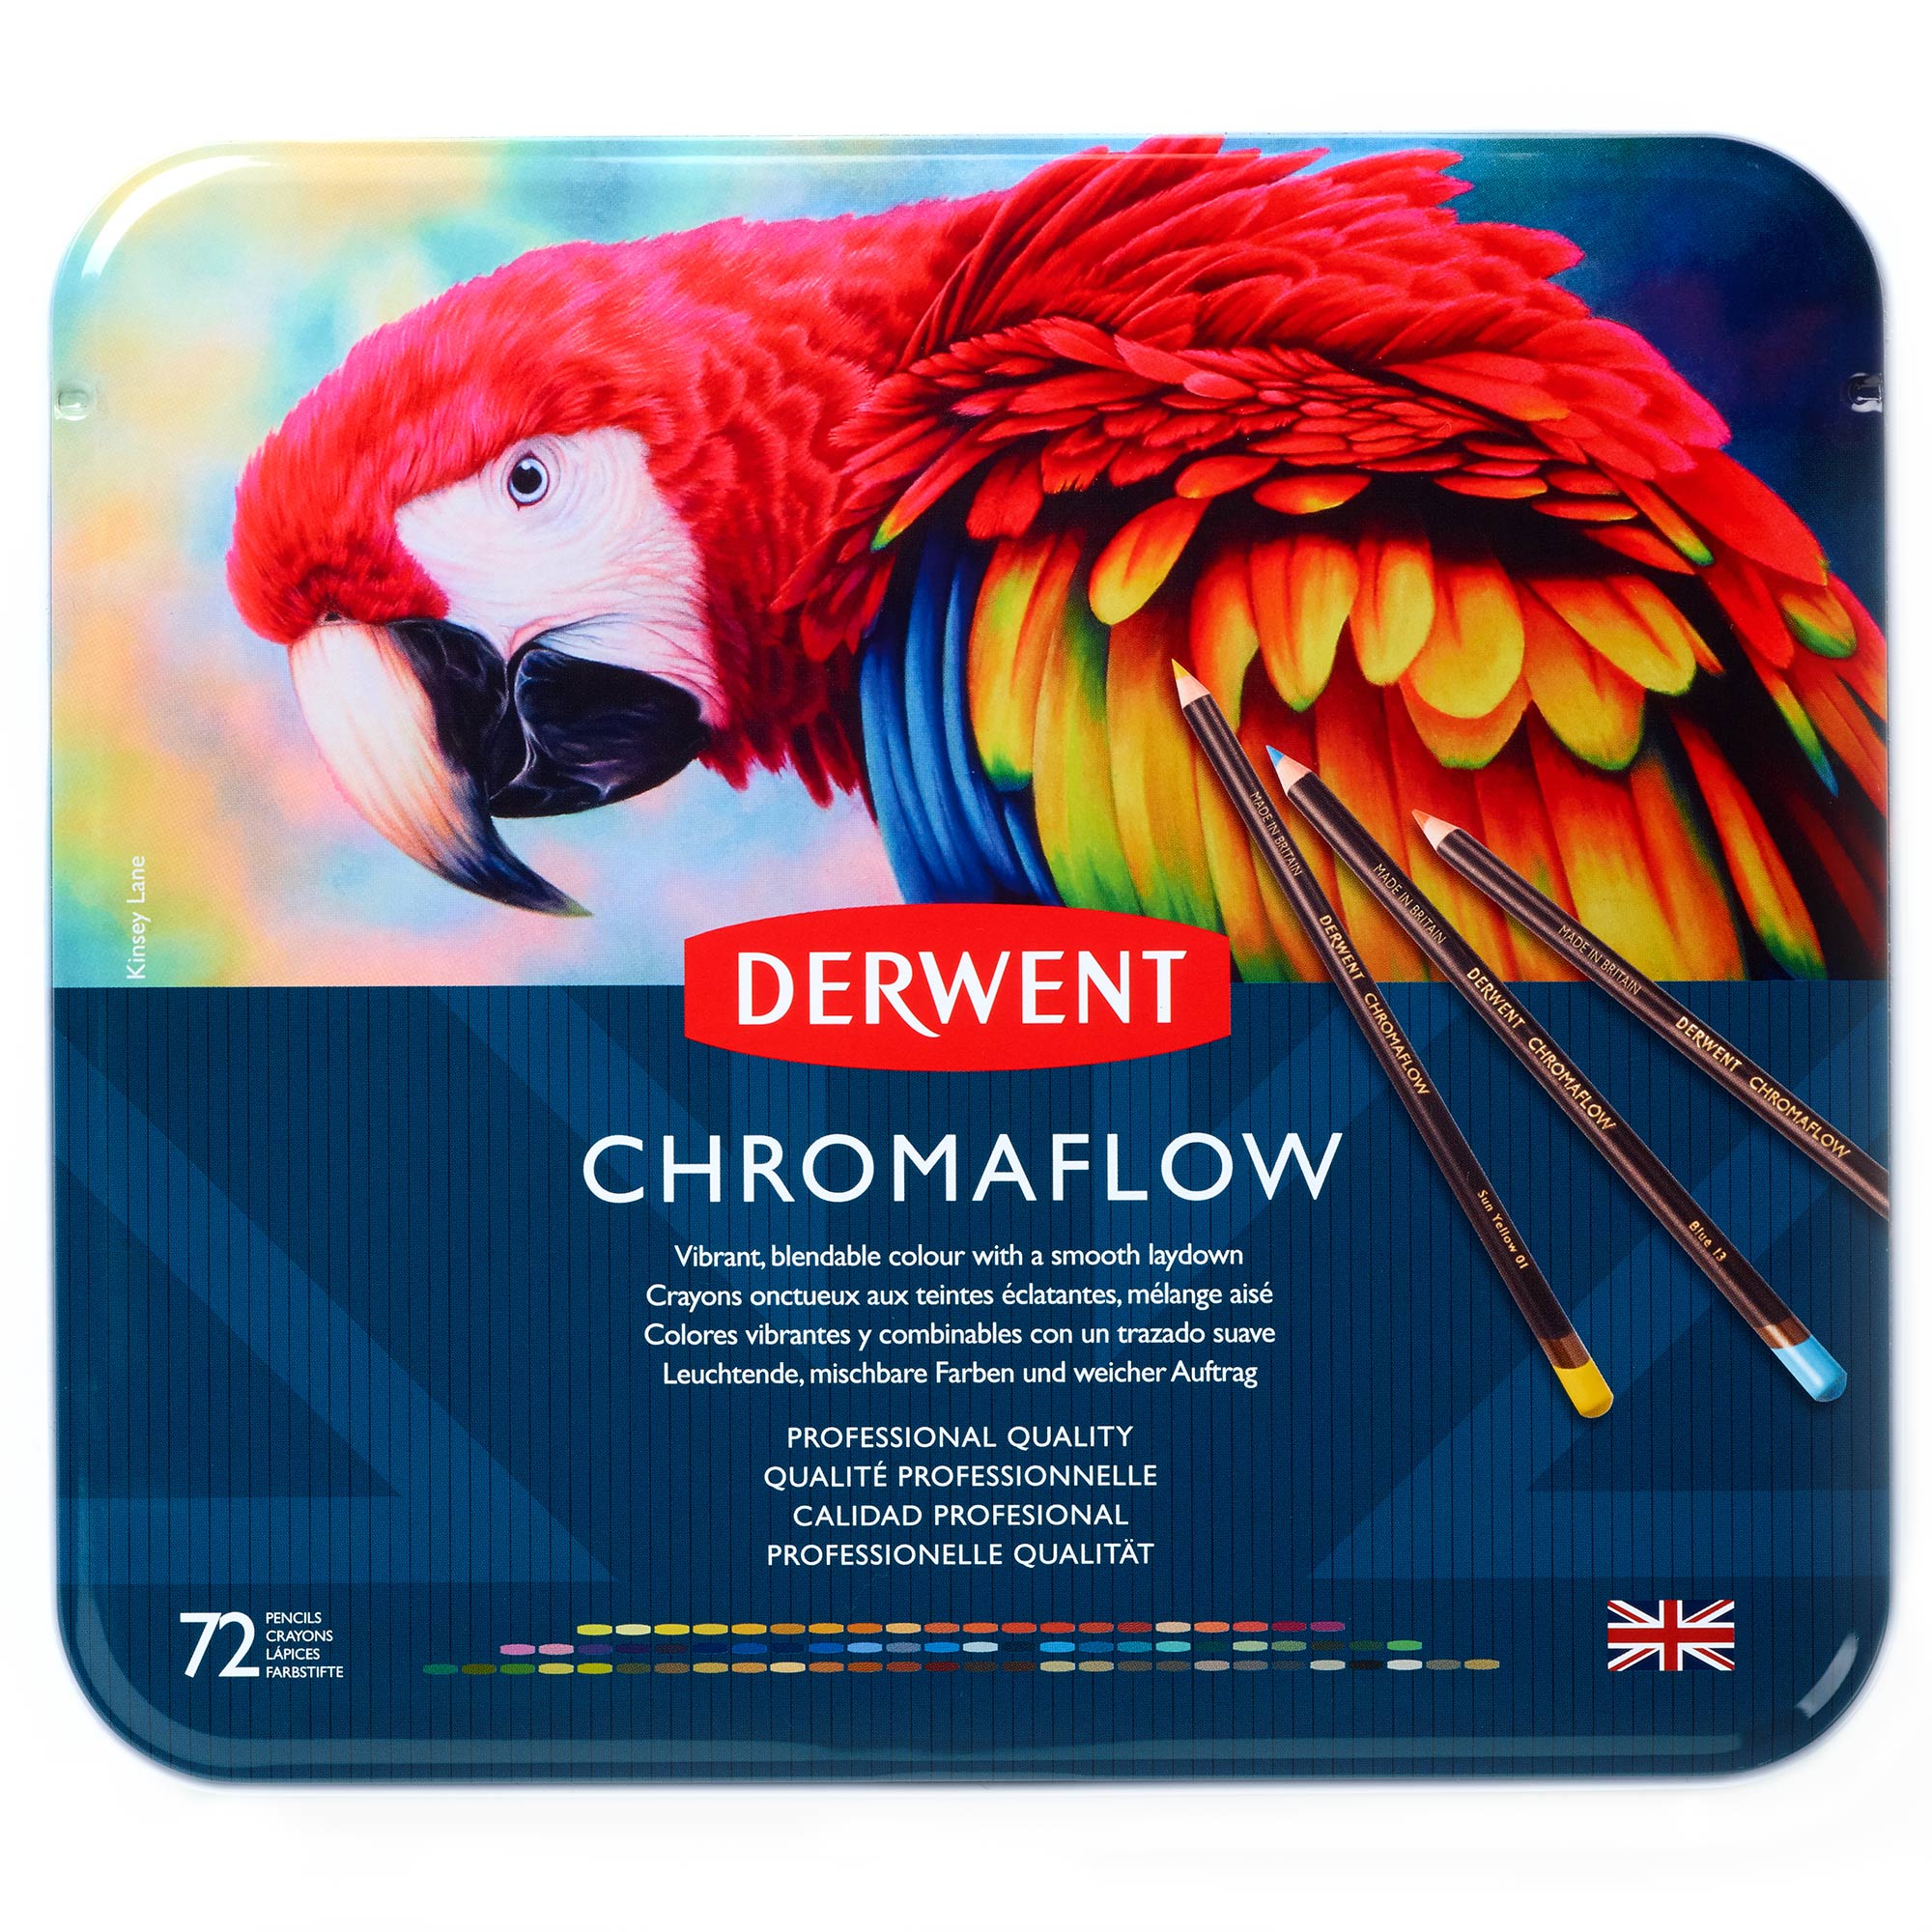 Derwent Chromaflow Pencils - Set of 72 - FREE Set of 2 Blender Pens